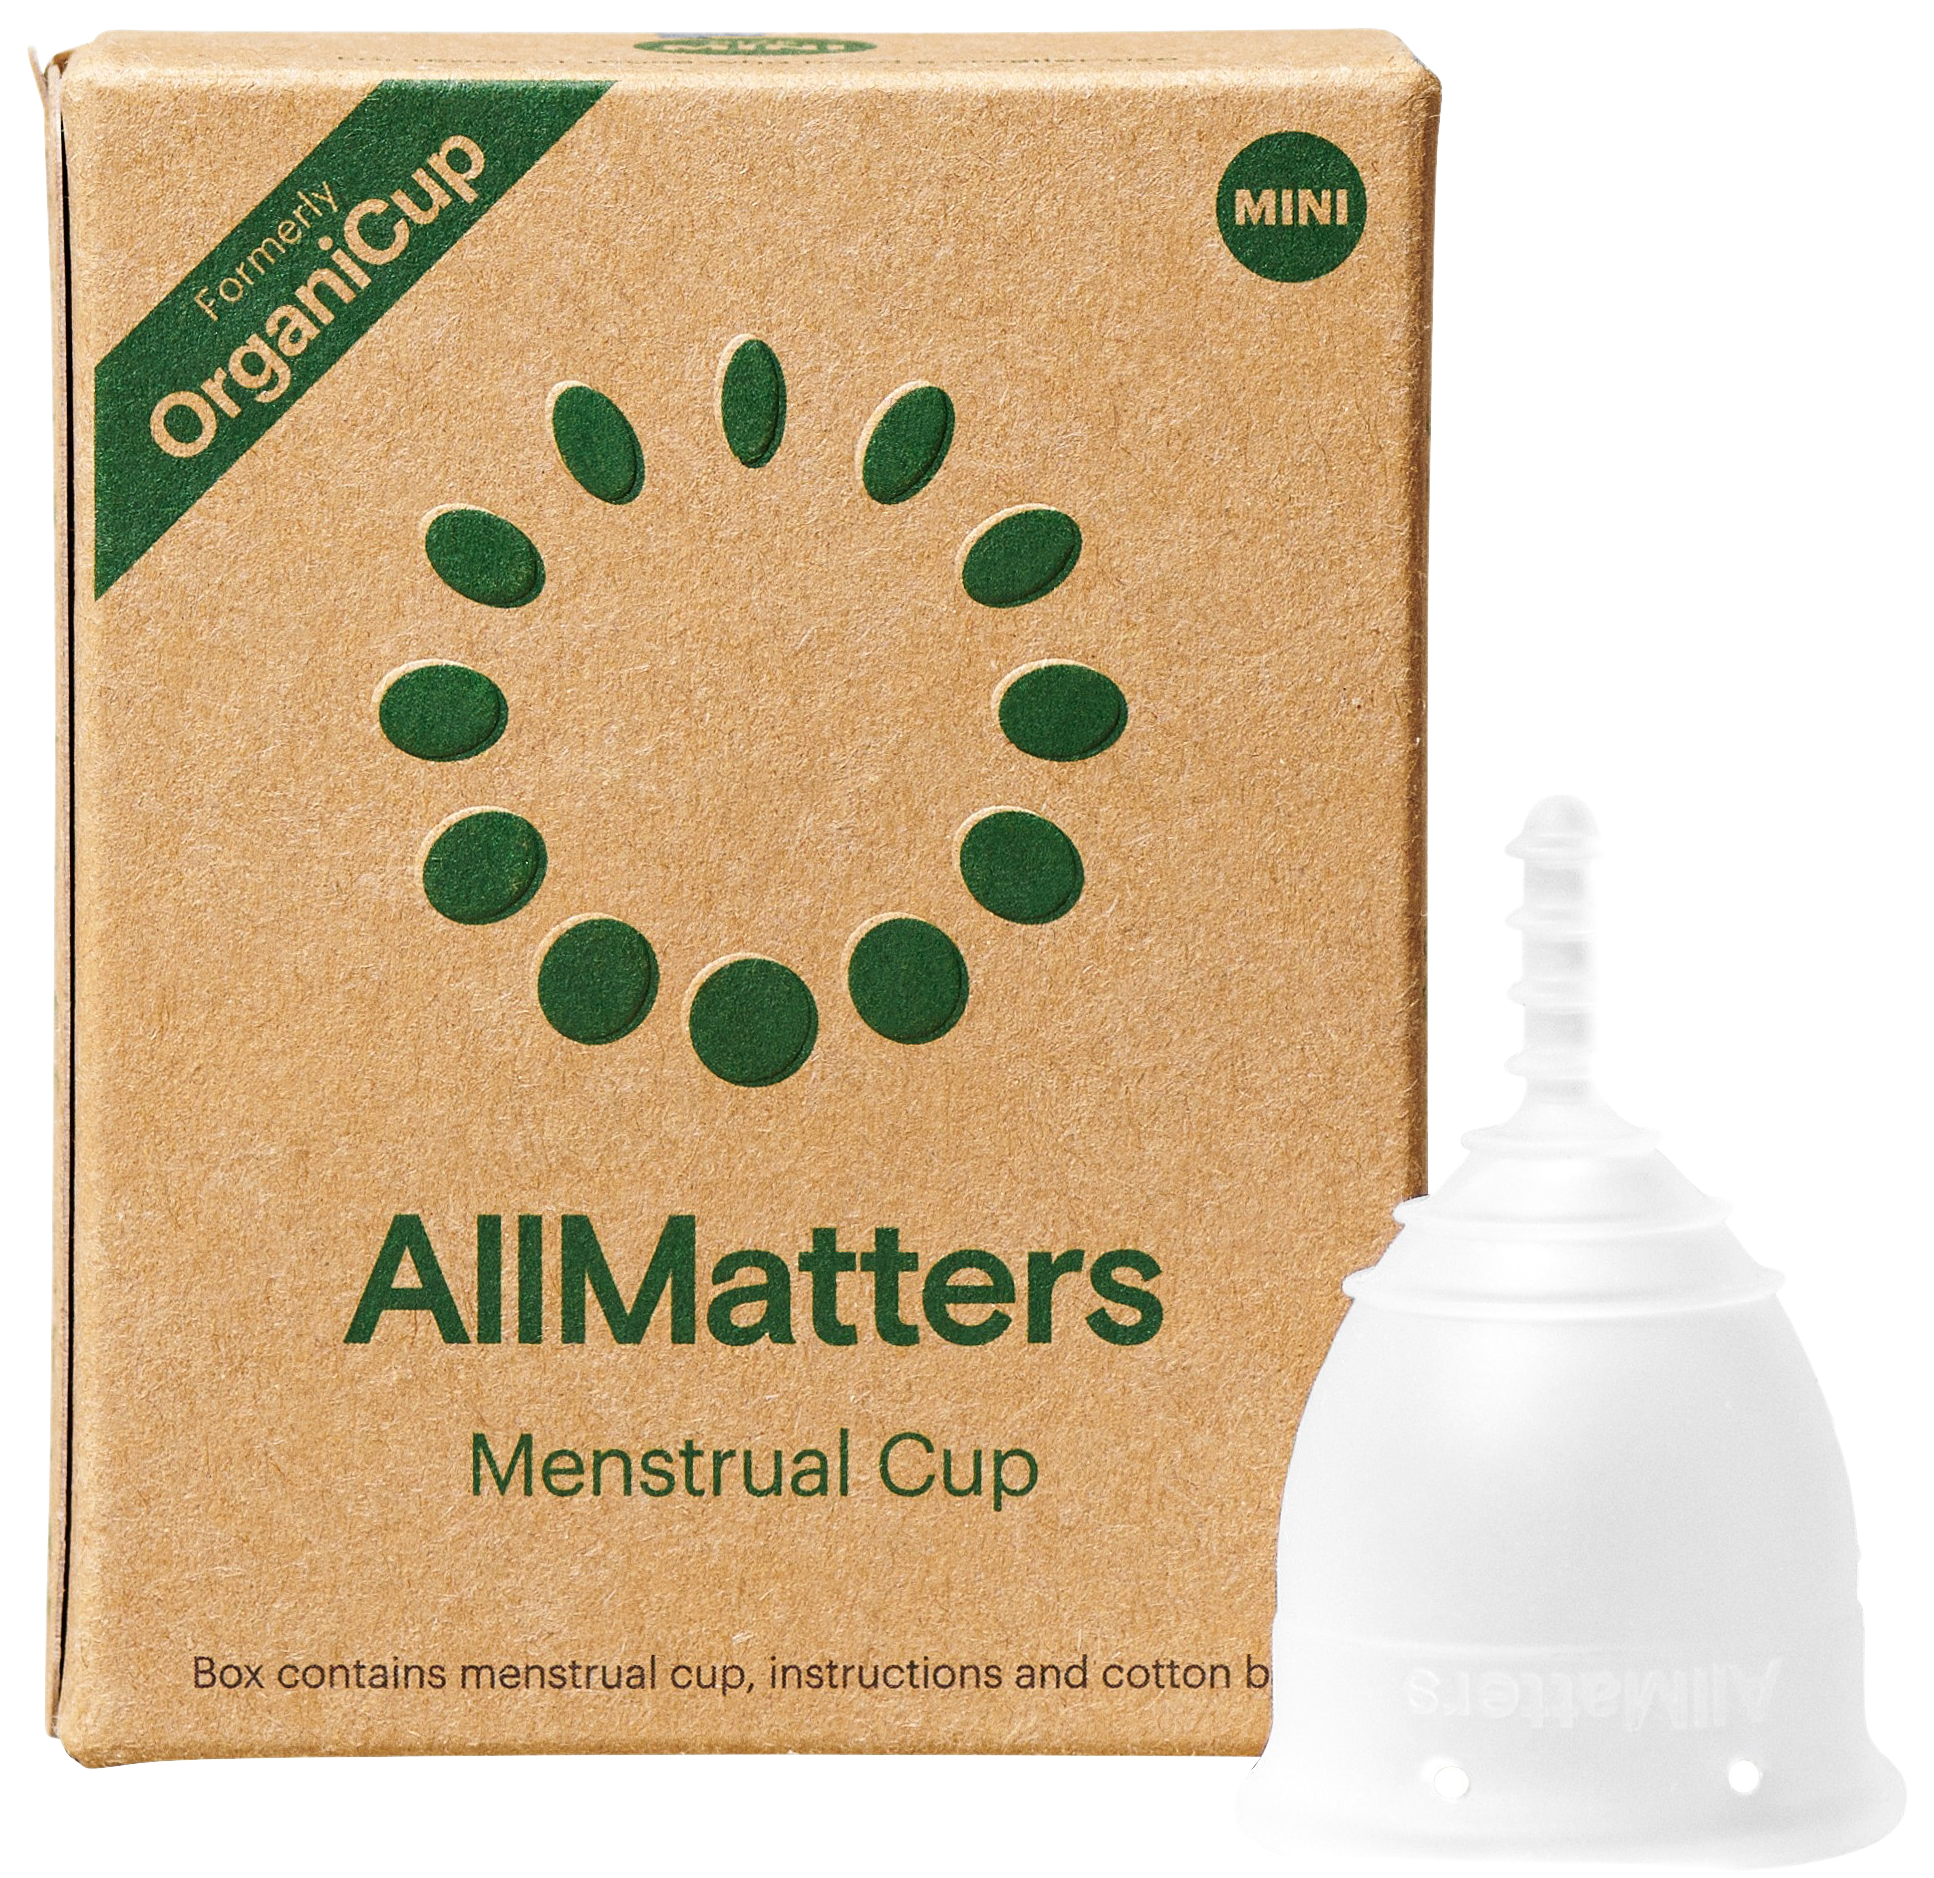 AllMatters Menstrual Cup, Størrelse Mini, 1 stk.